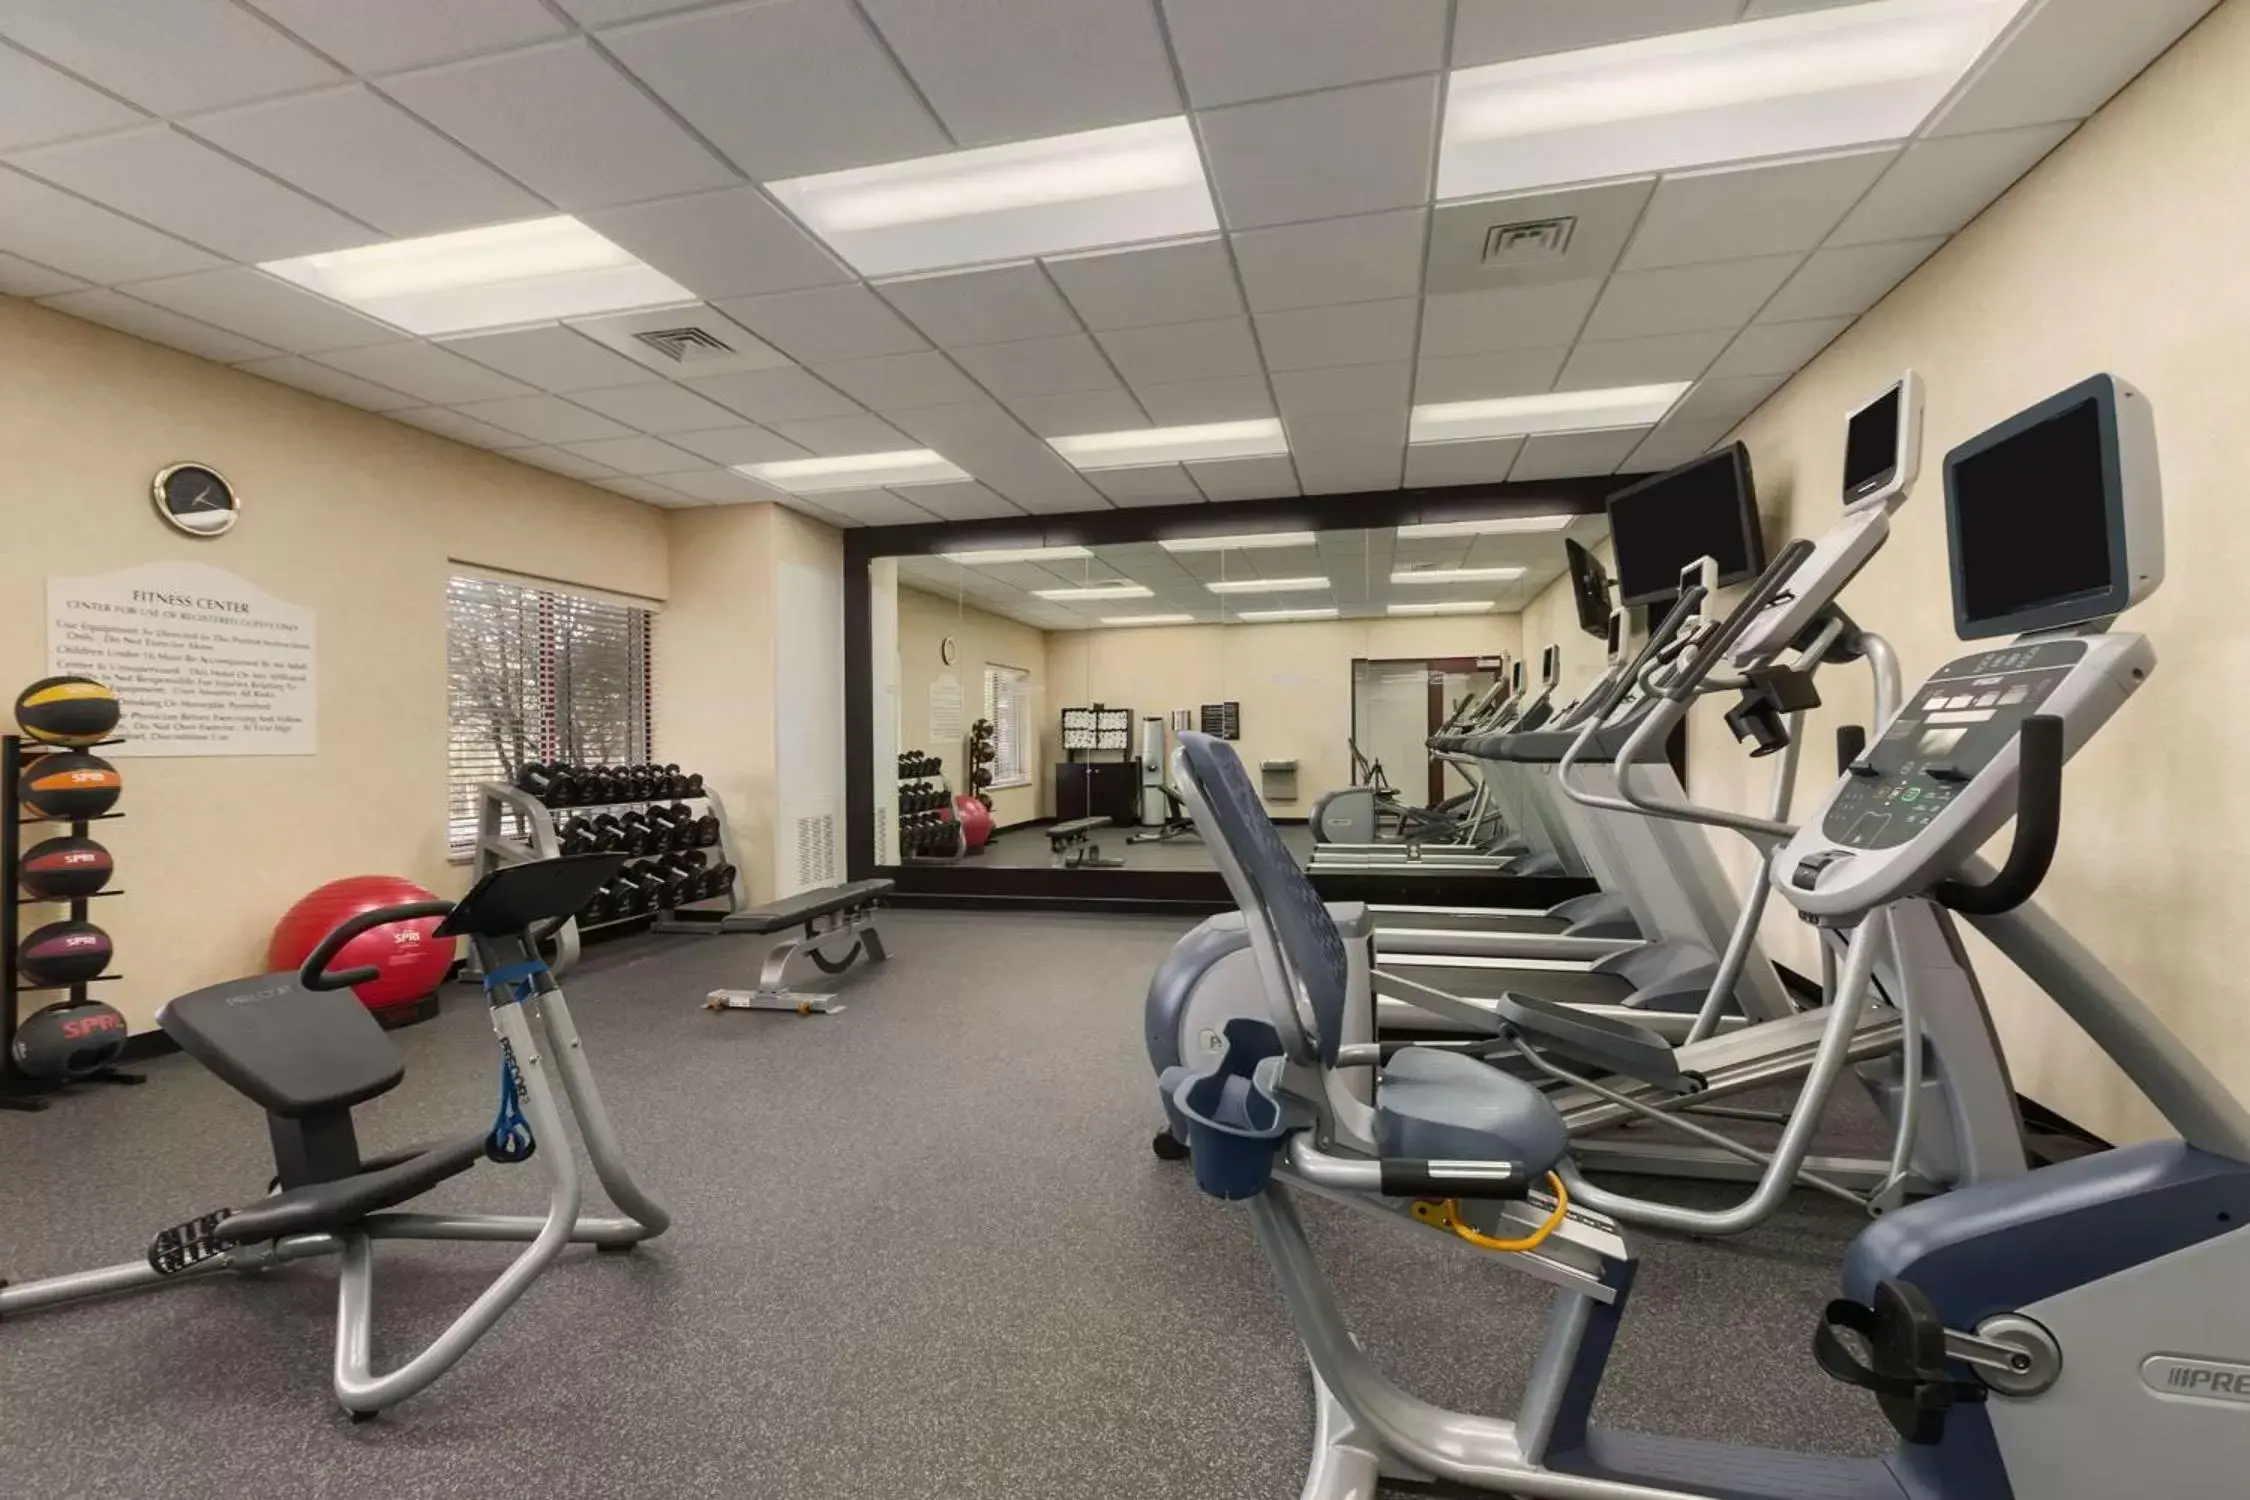 Fitness centre/facilities, Fitness Center/Facilities in Hilton Garden Inn Wisconsin Dells